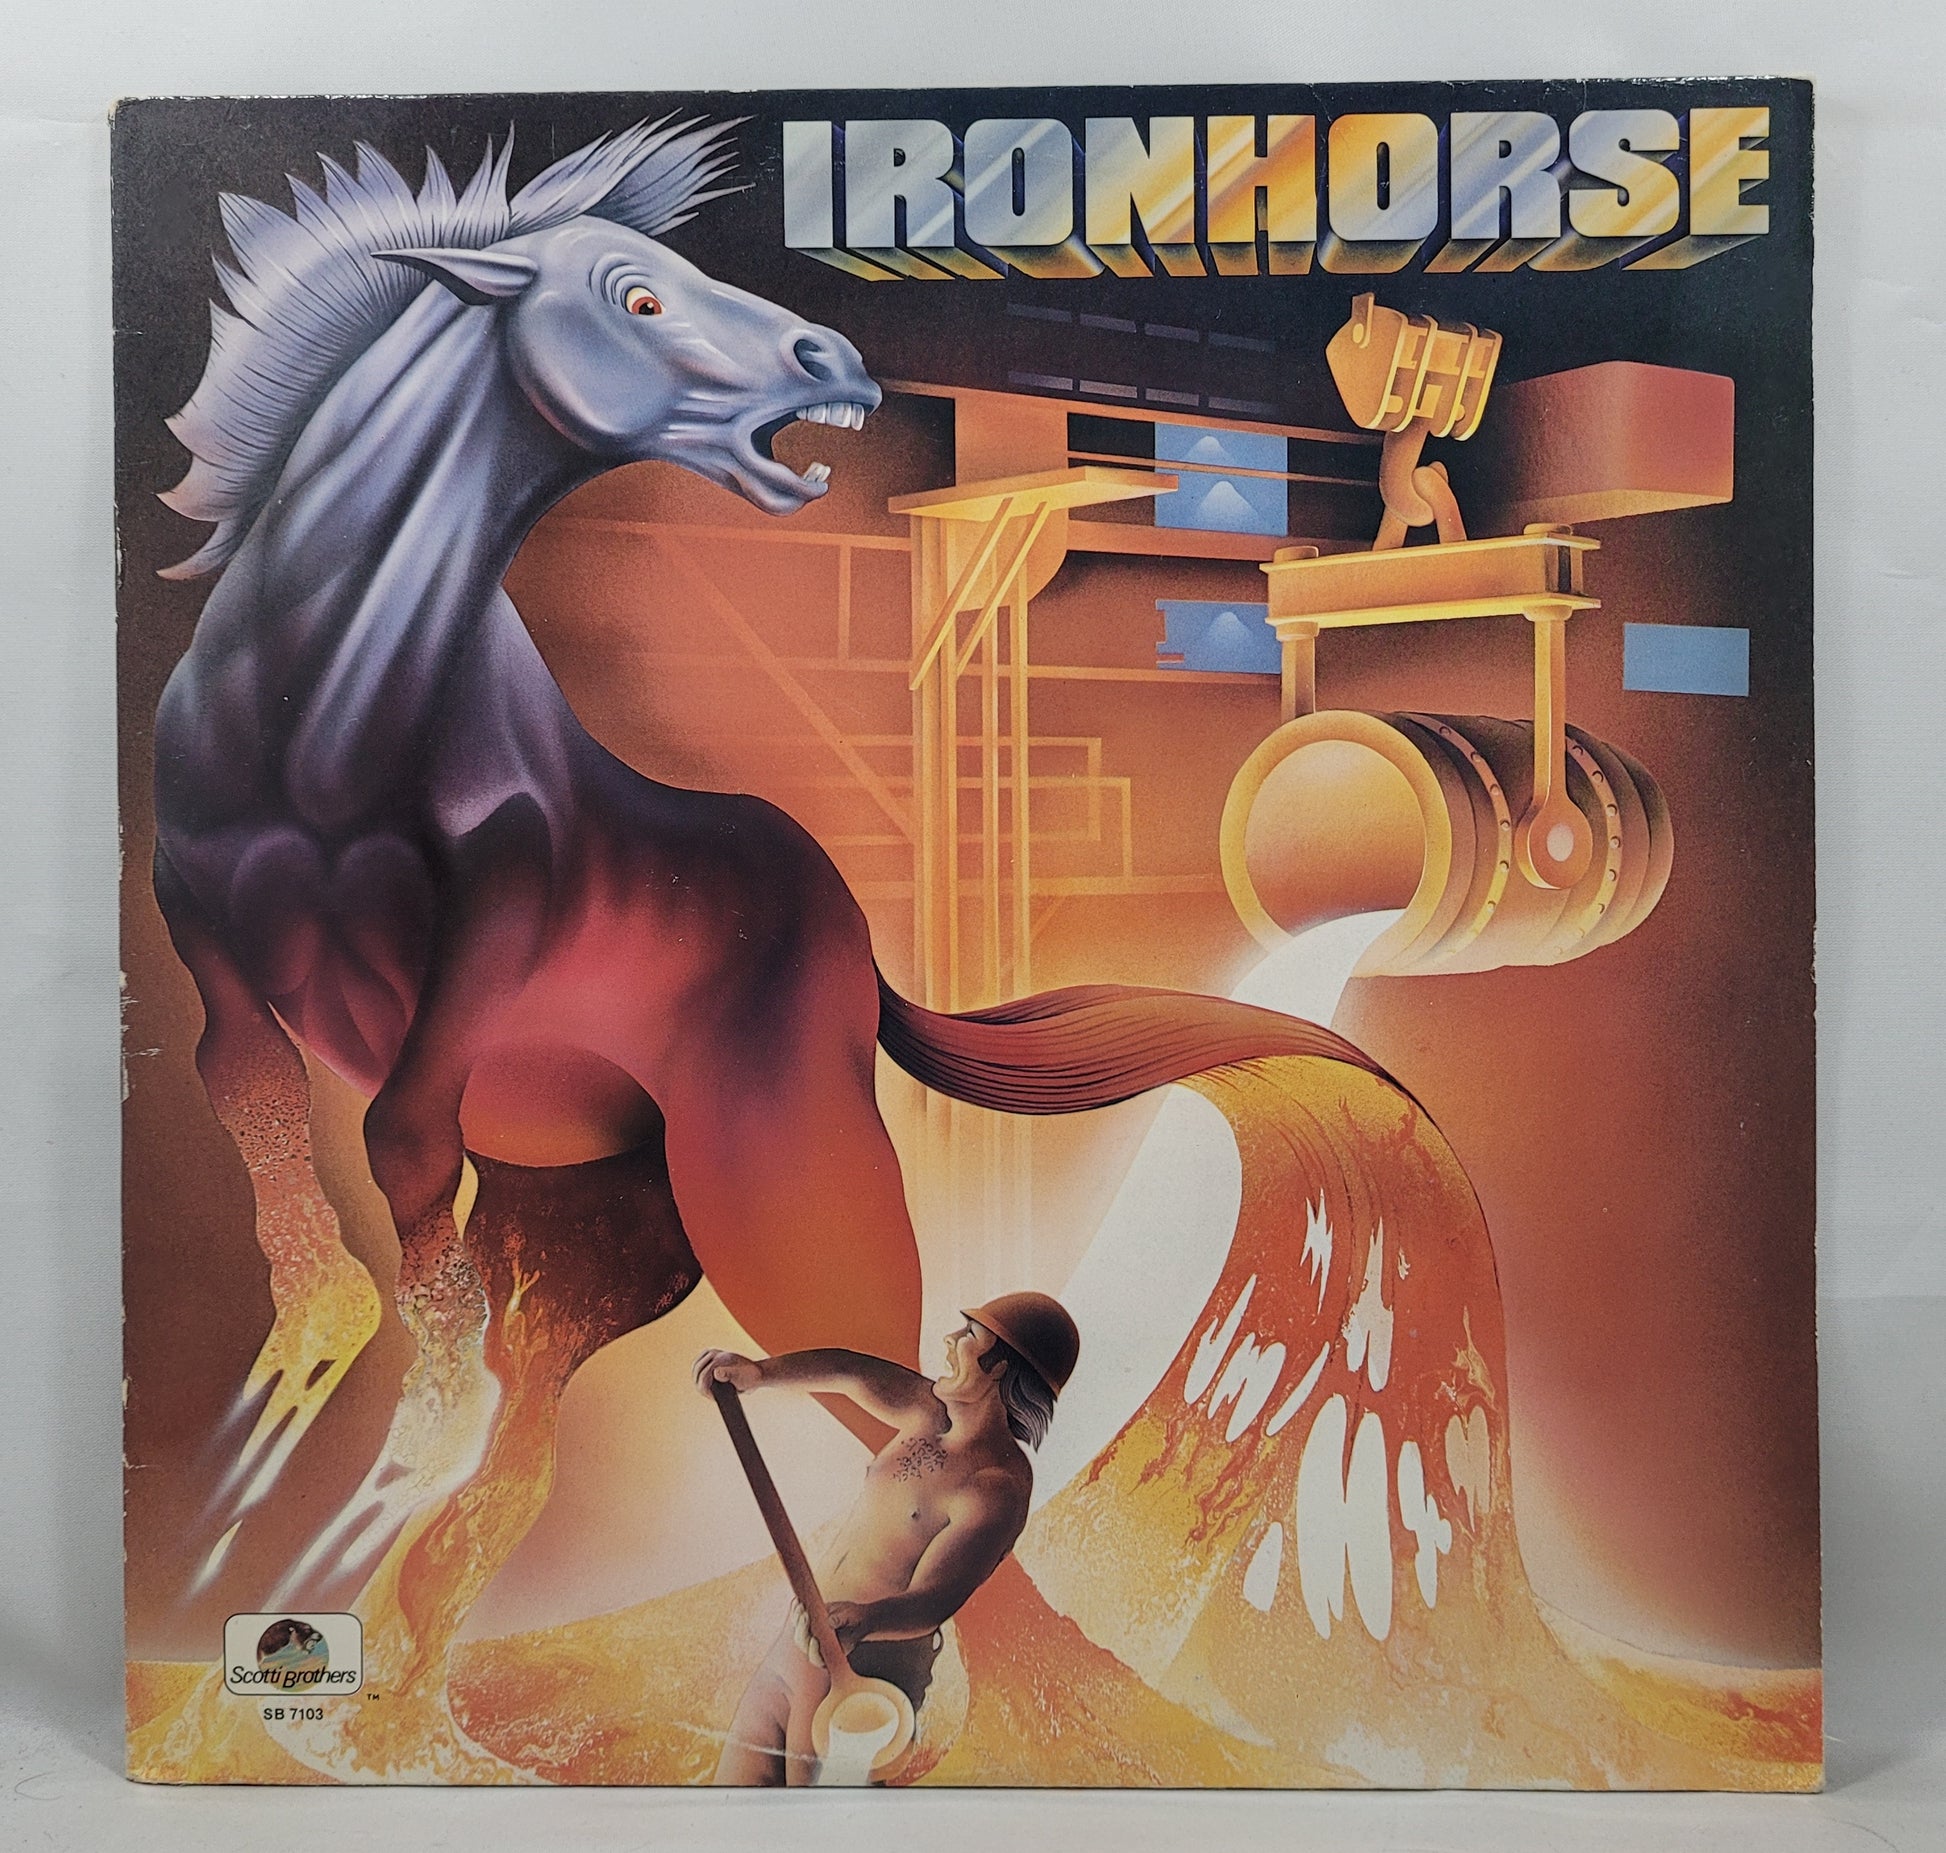 Ironhorse - Ironhorse [1979 Monarch Pressing] [Used Vinyl Record LP] [B]